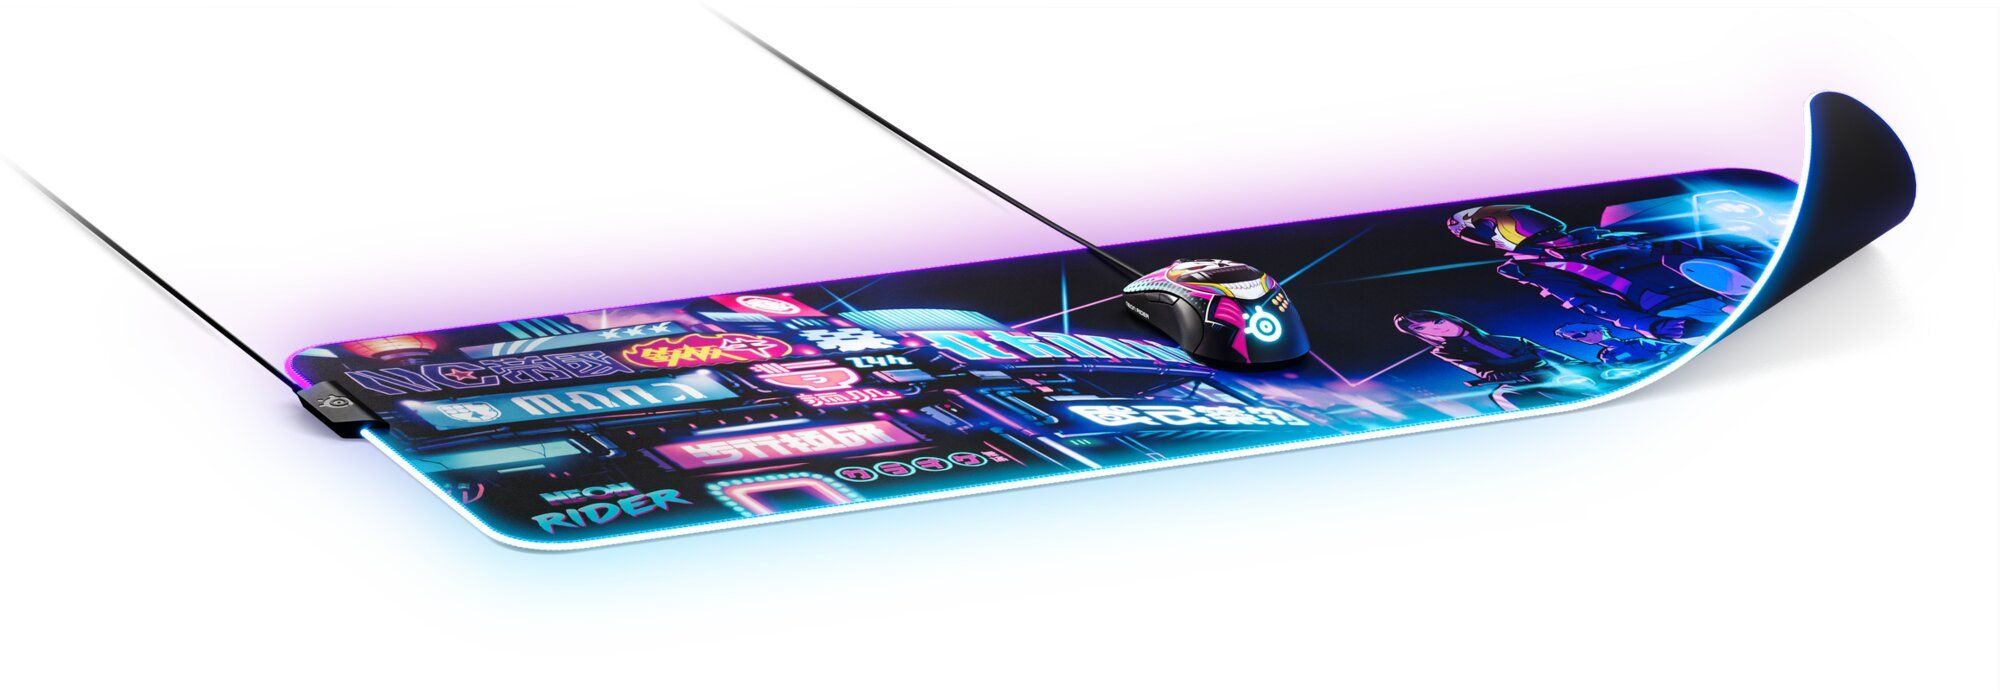 SteelSeries QcK Prism CS:GO Neon Rider Edition, XL (63809)